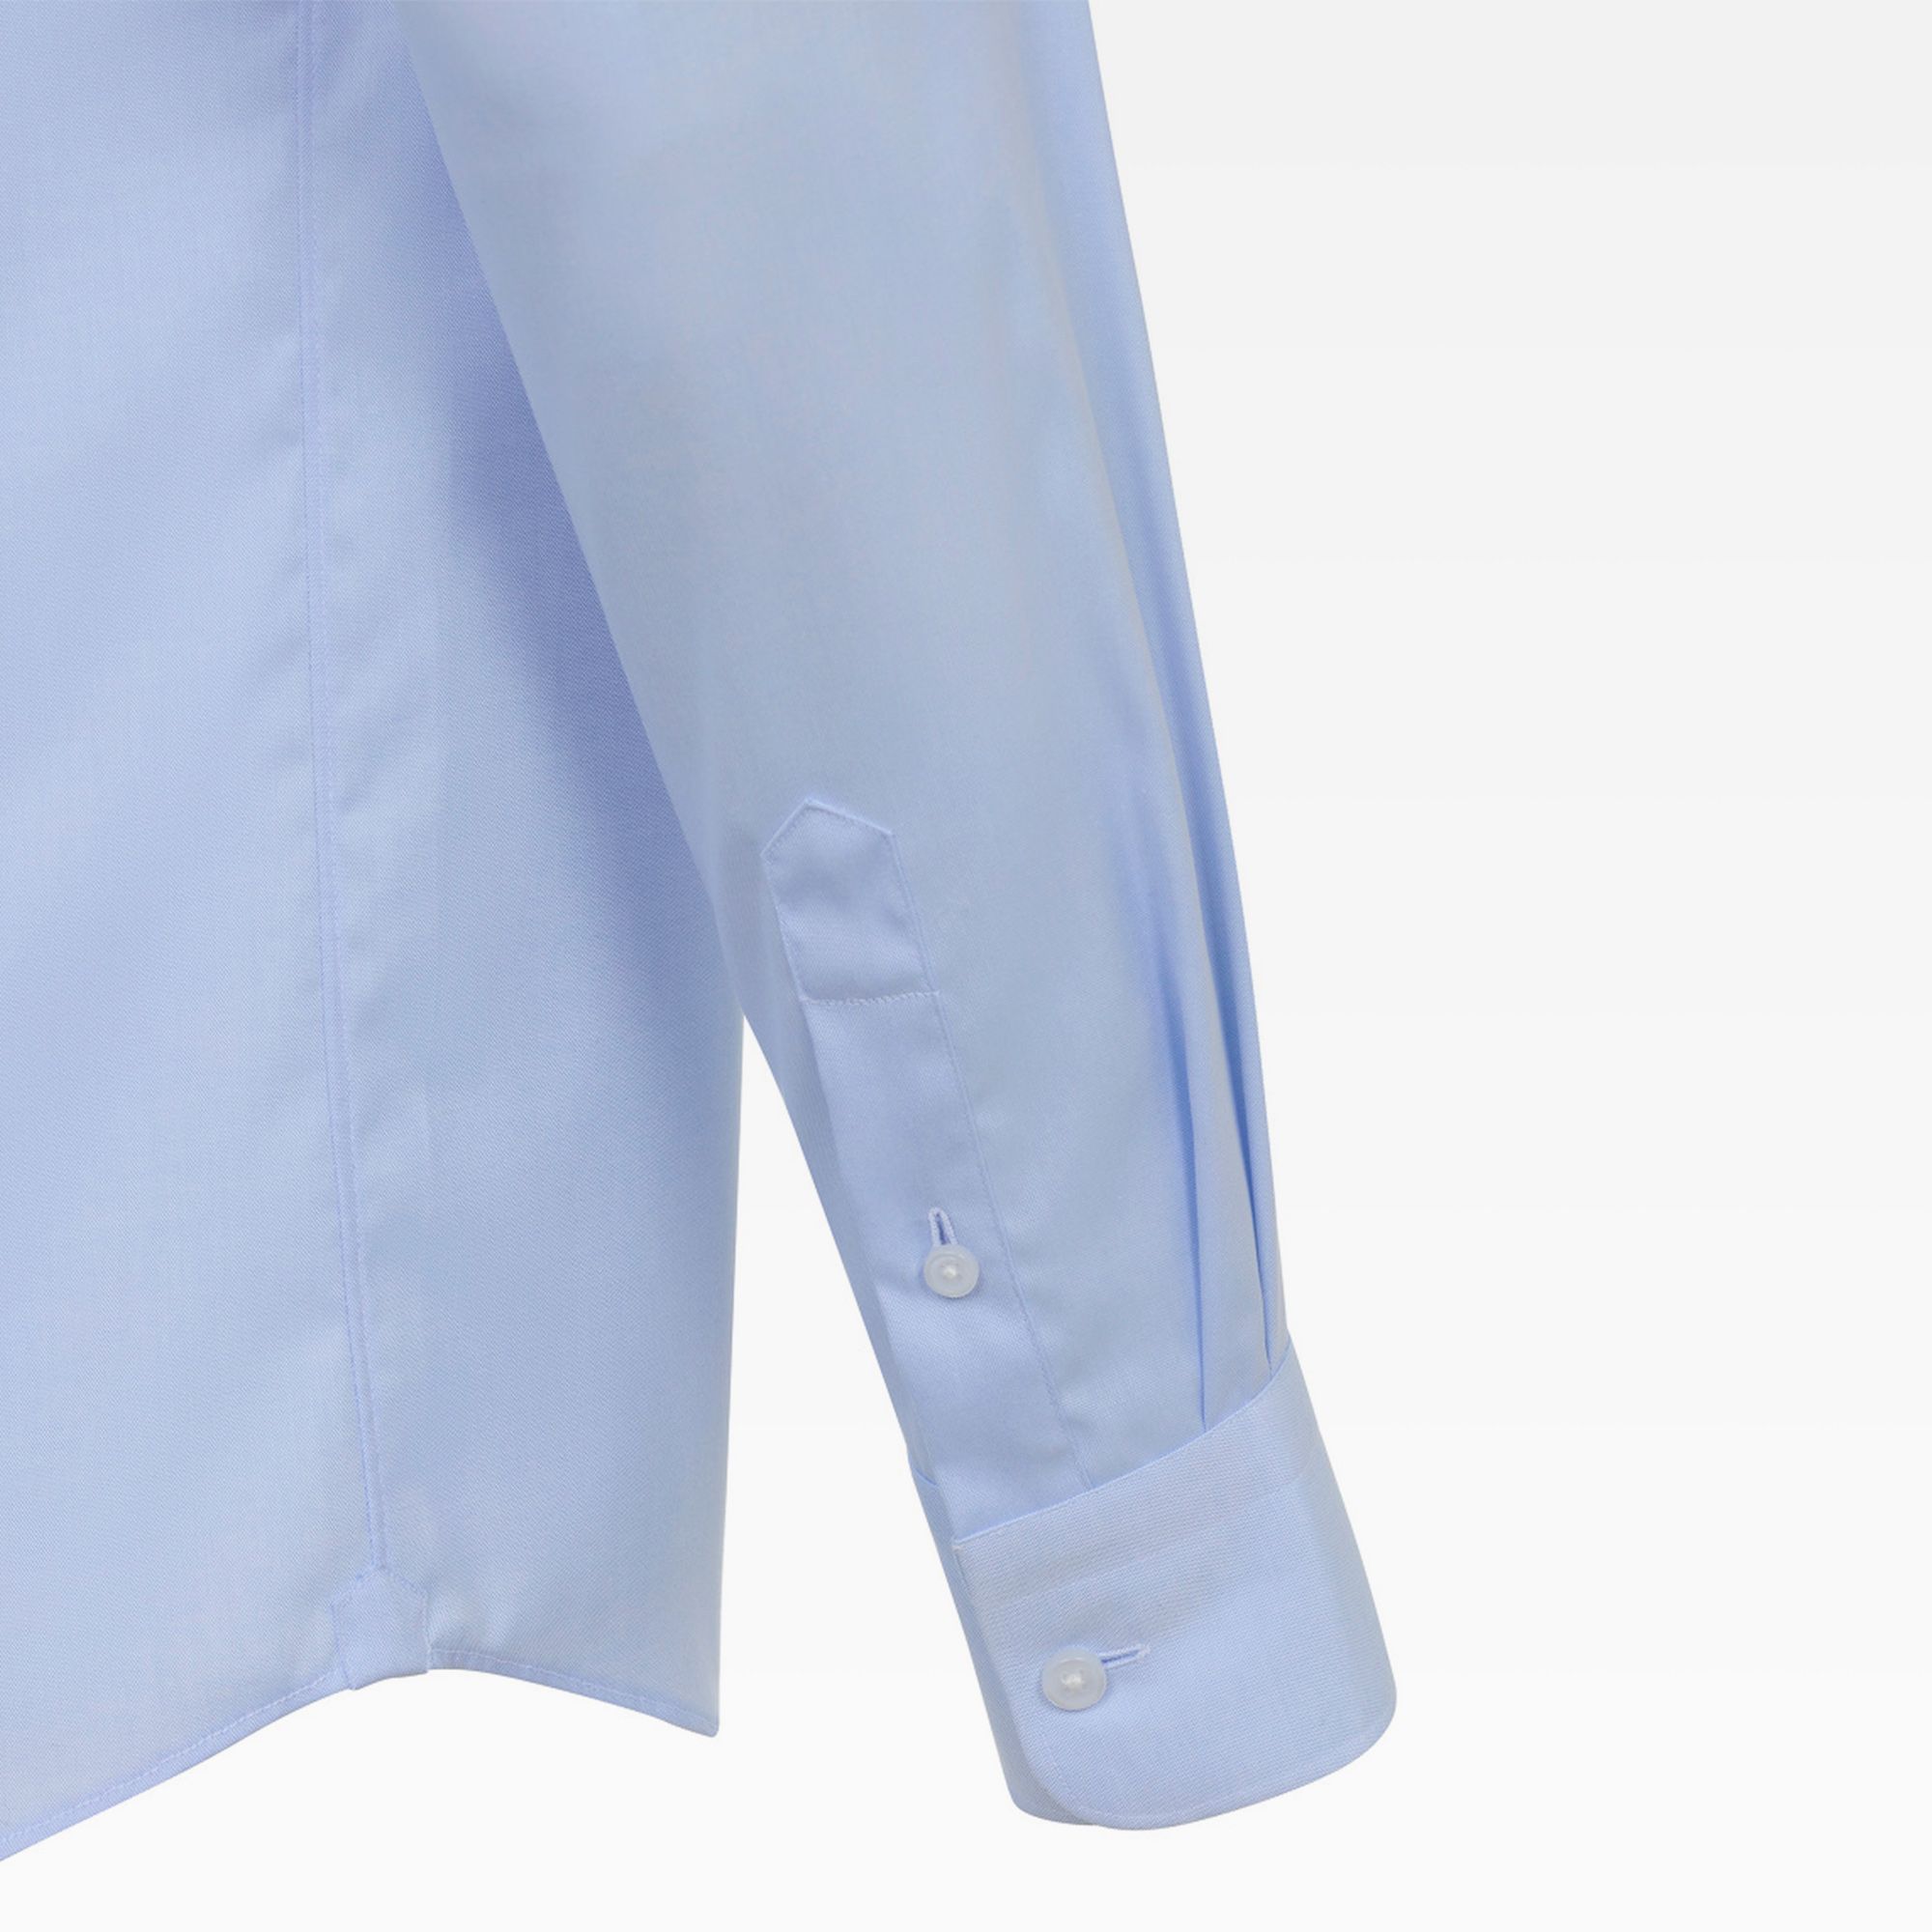 Mandarin collar shirt with hidden placket L/S Style: 30-29492